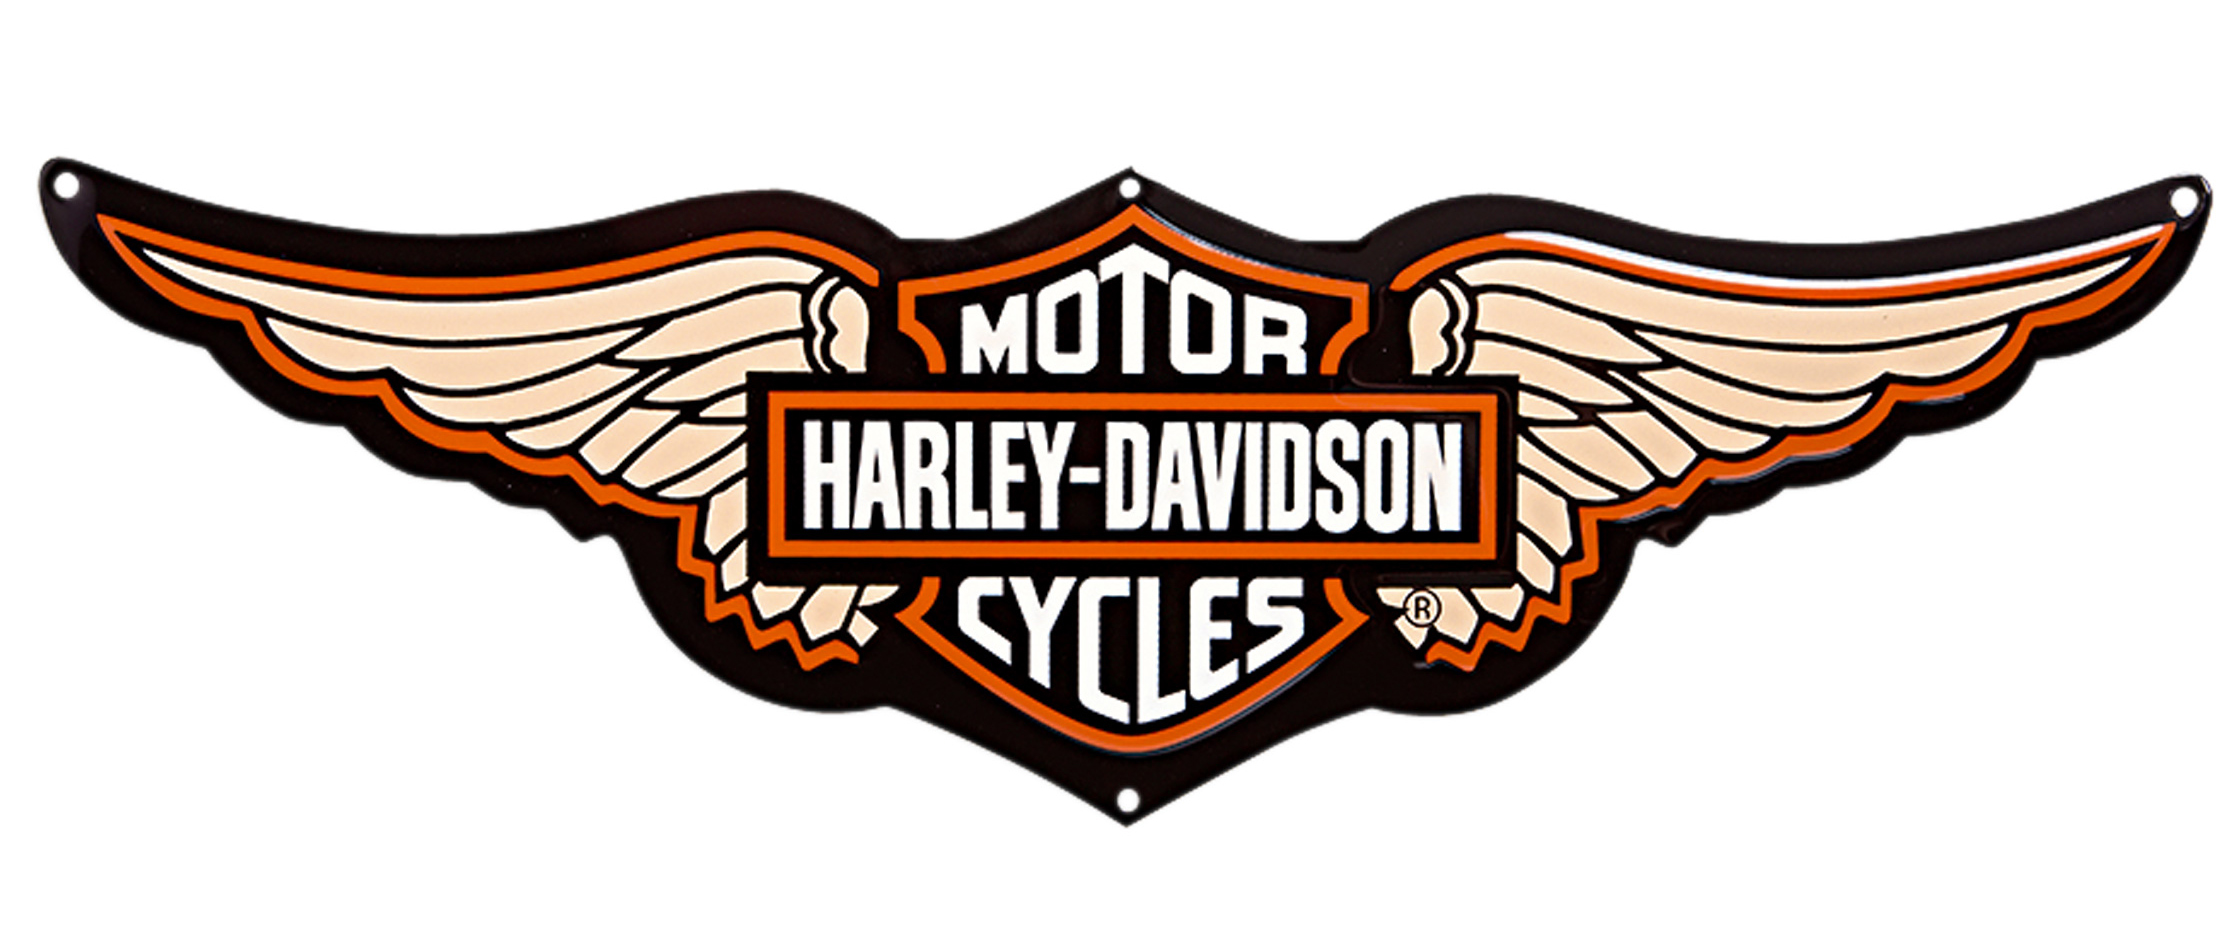 Harley davidson logo motorcycle brands logo specs history jpg